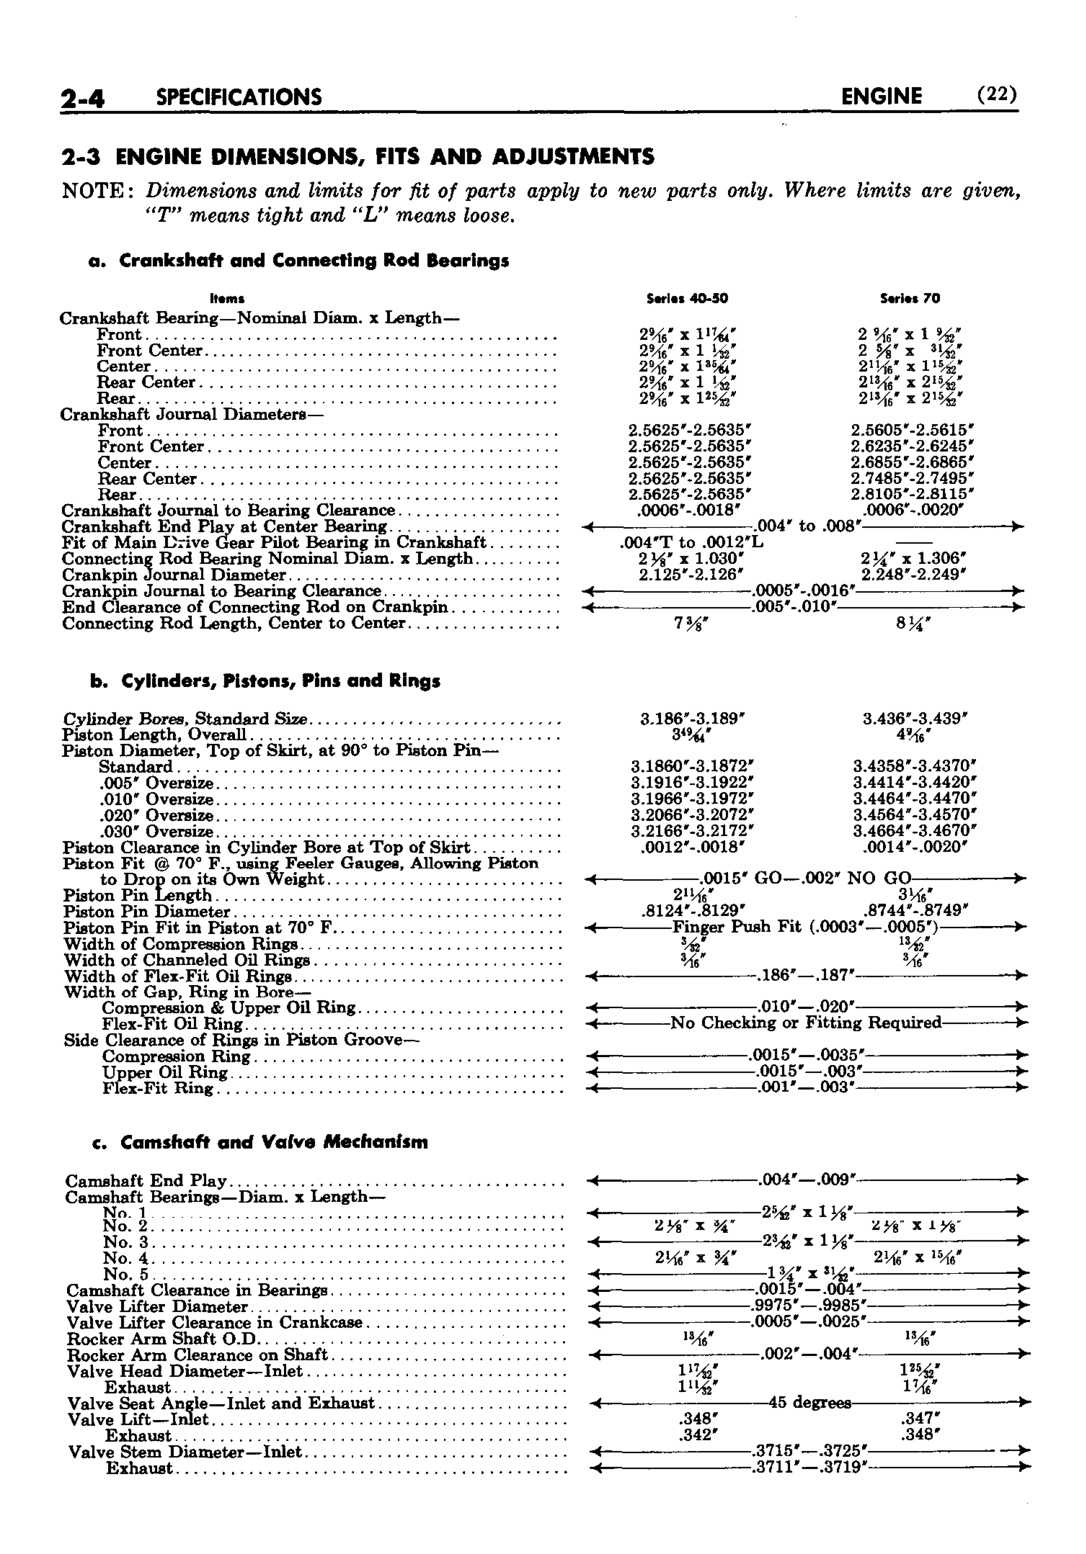 n_03 1952 Buick Shop Manual - Engine-004-004.jpg